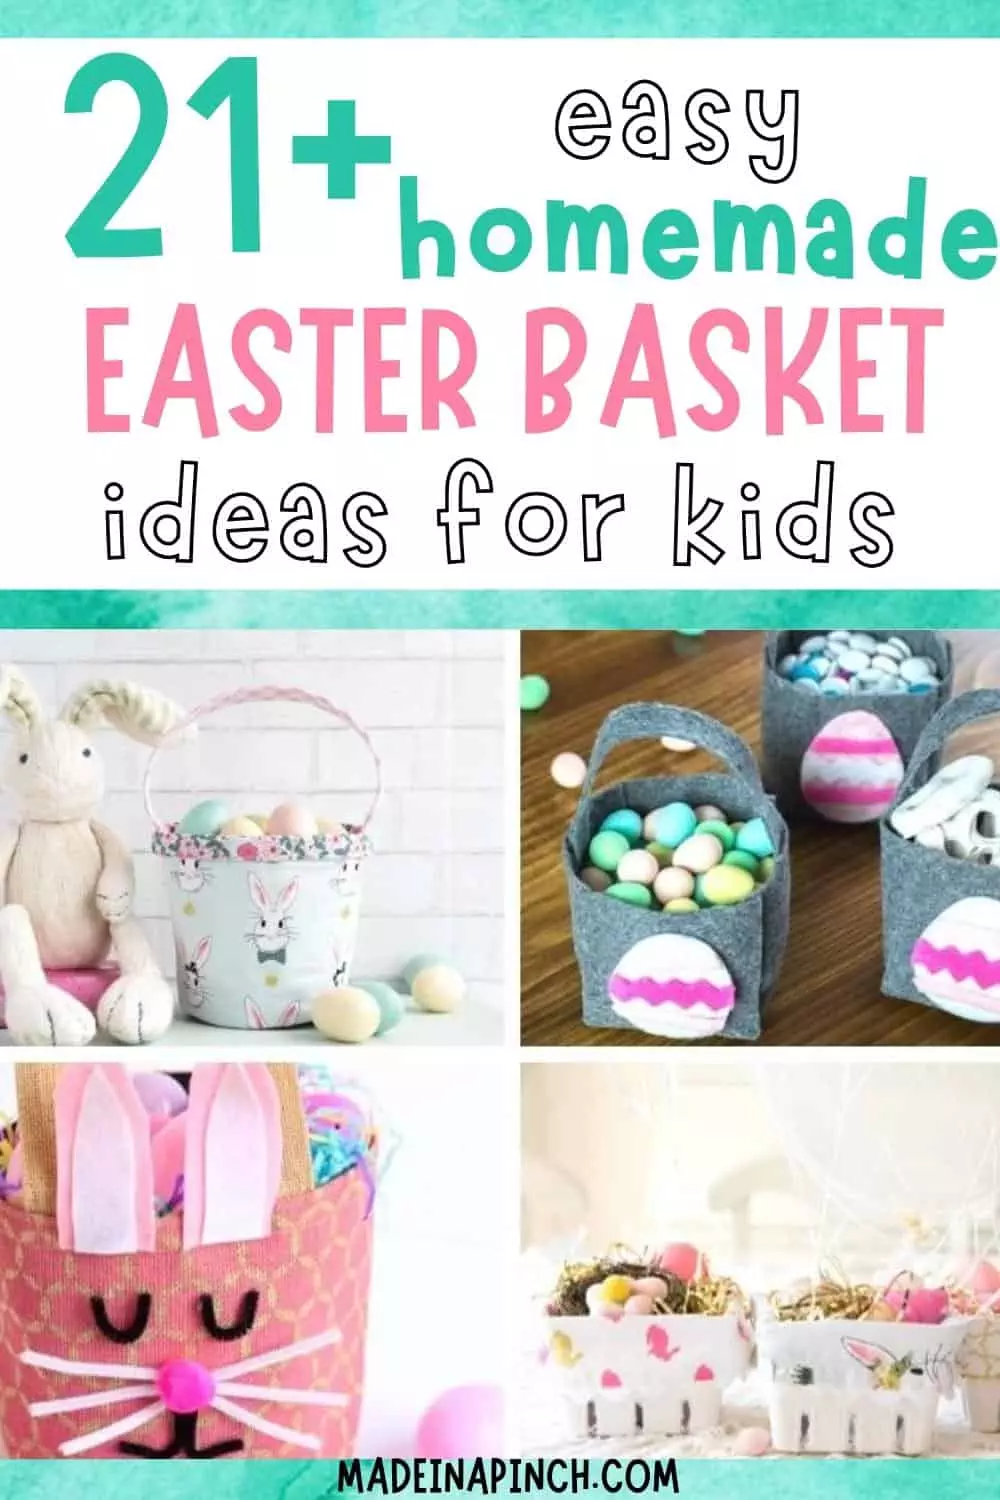 Making homemade Easter baskets isn